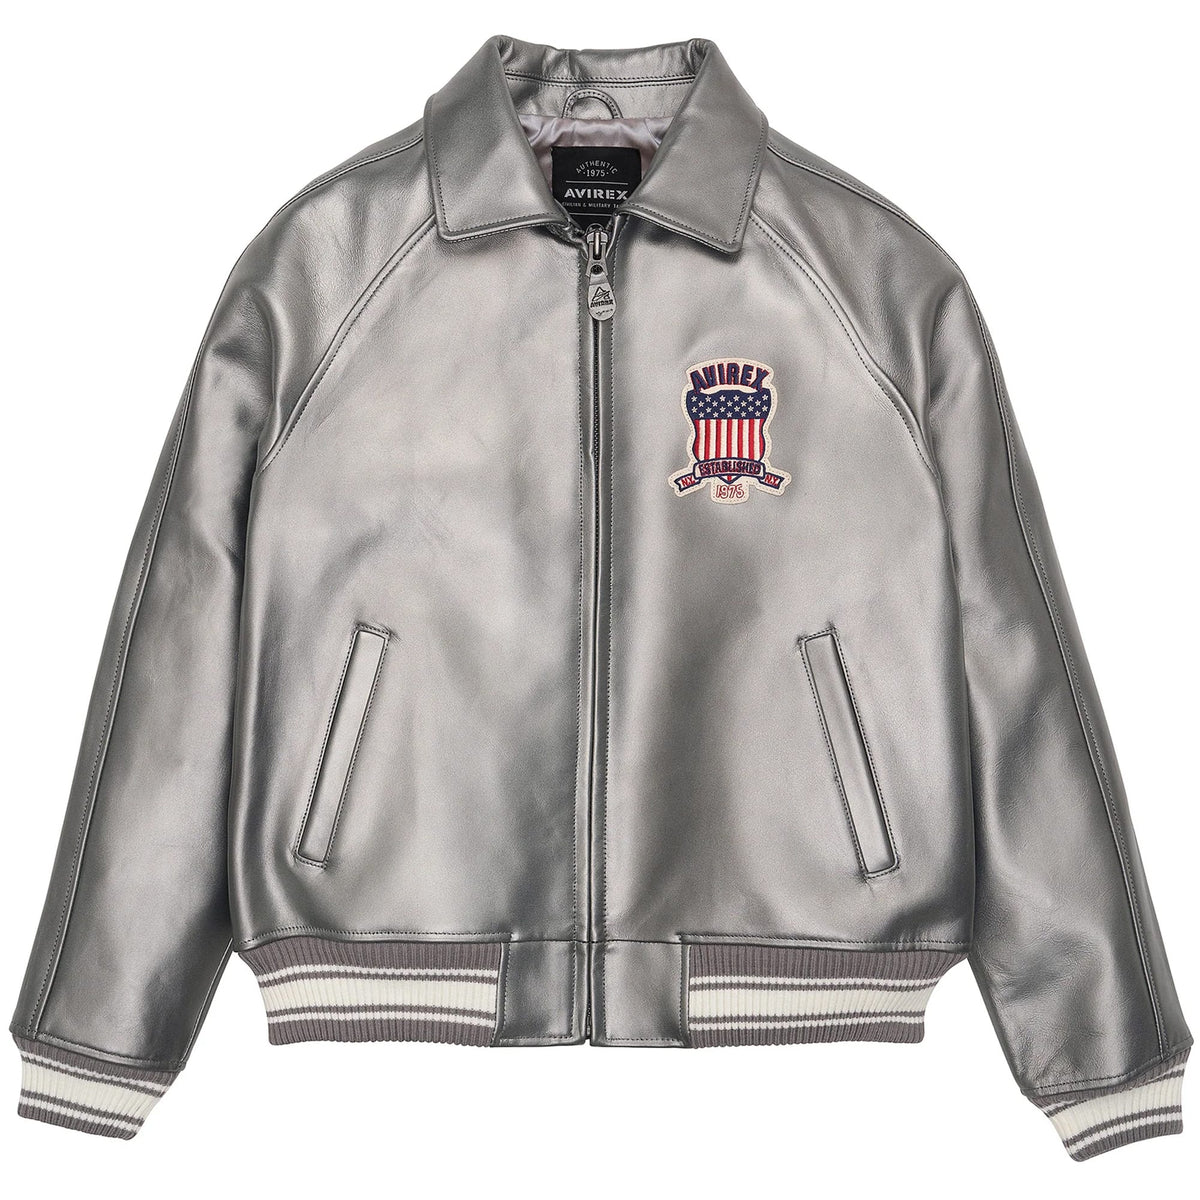 Men's Avirex Leather Jacket Iconic Avirex jacket (Metallic)